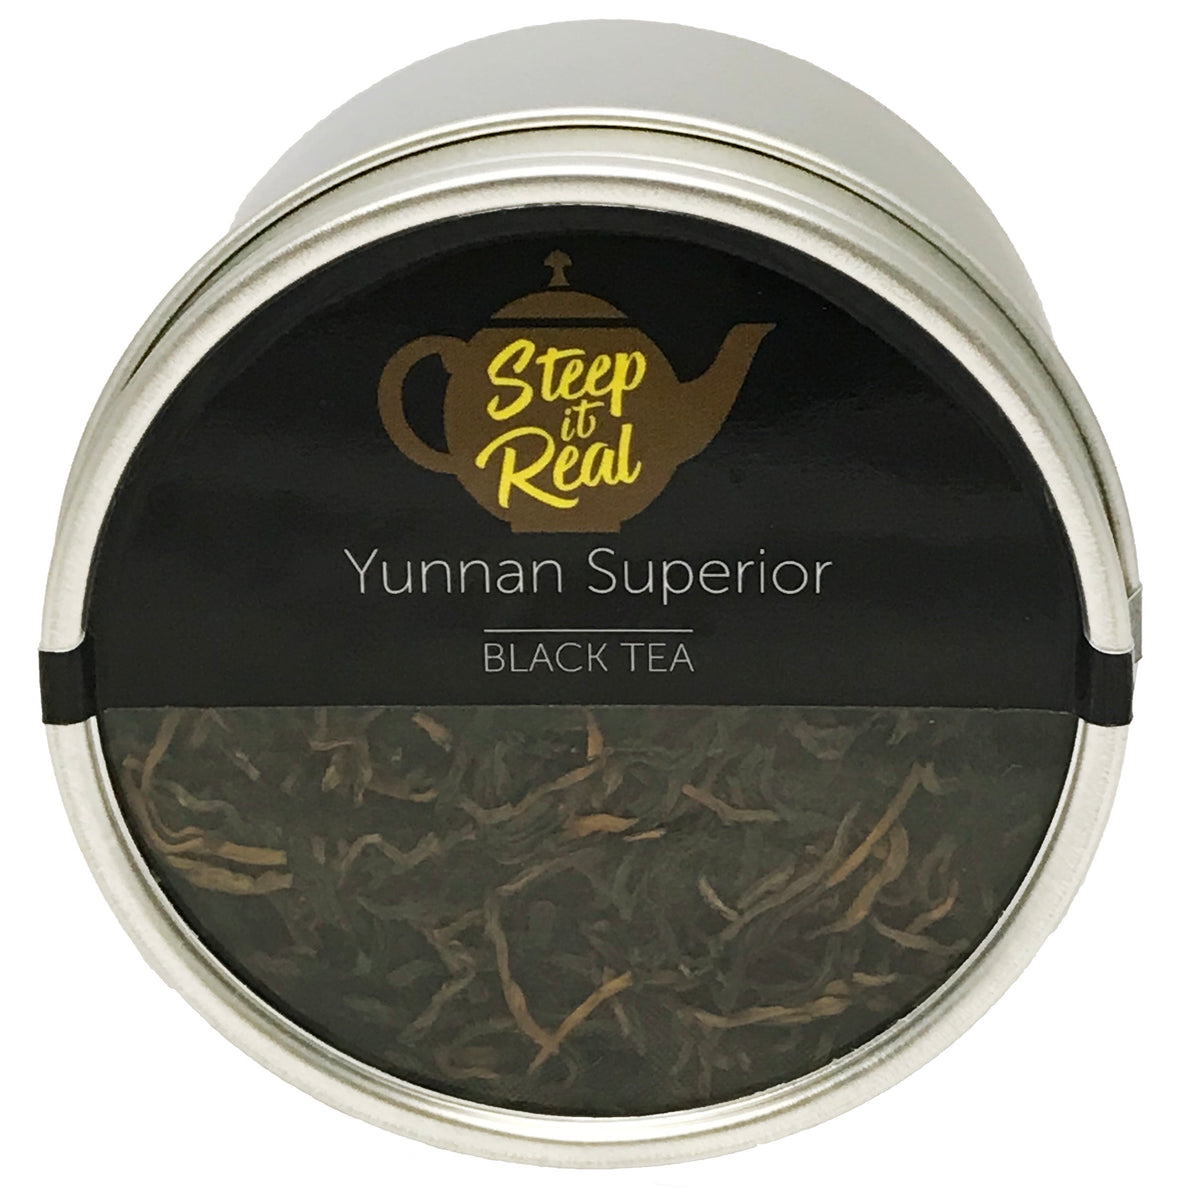 Yunnan Superior - I Have a Bean